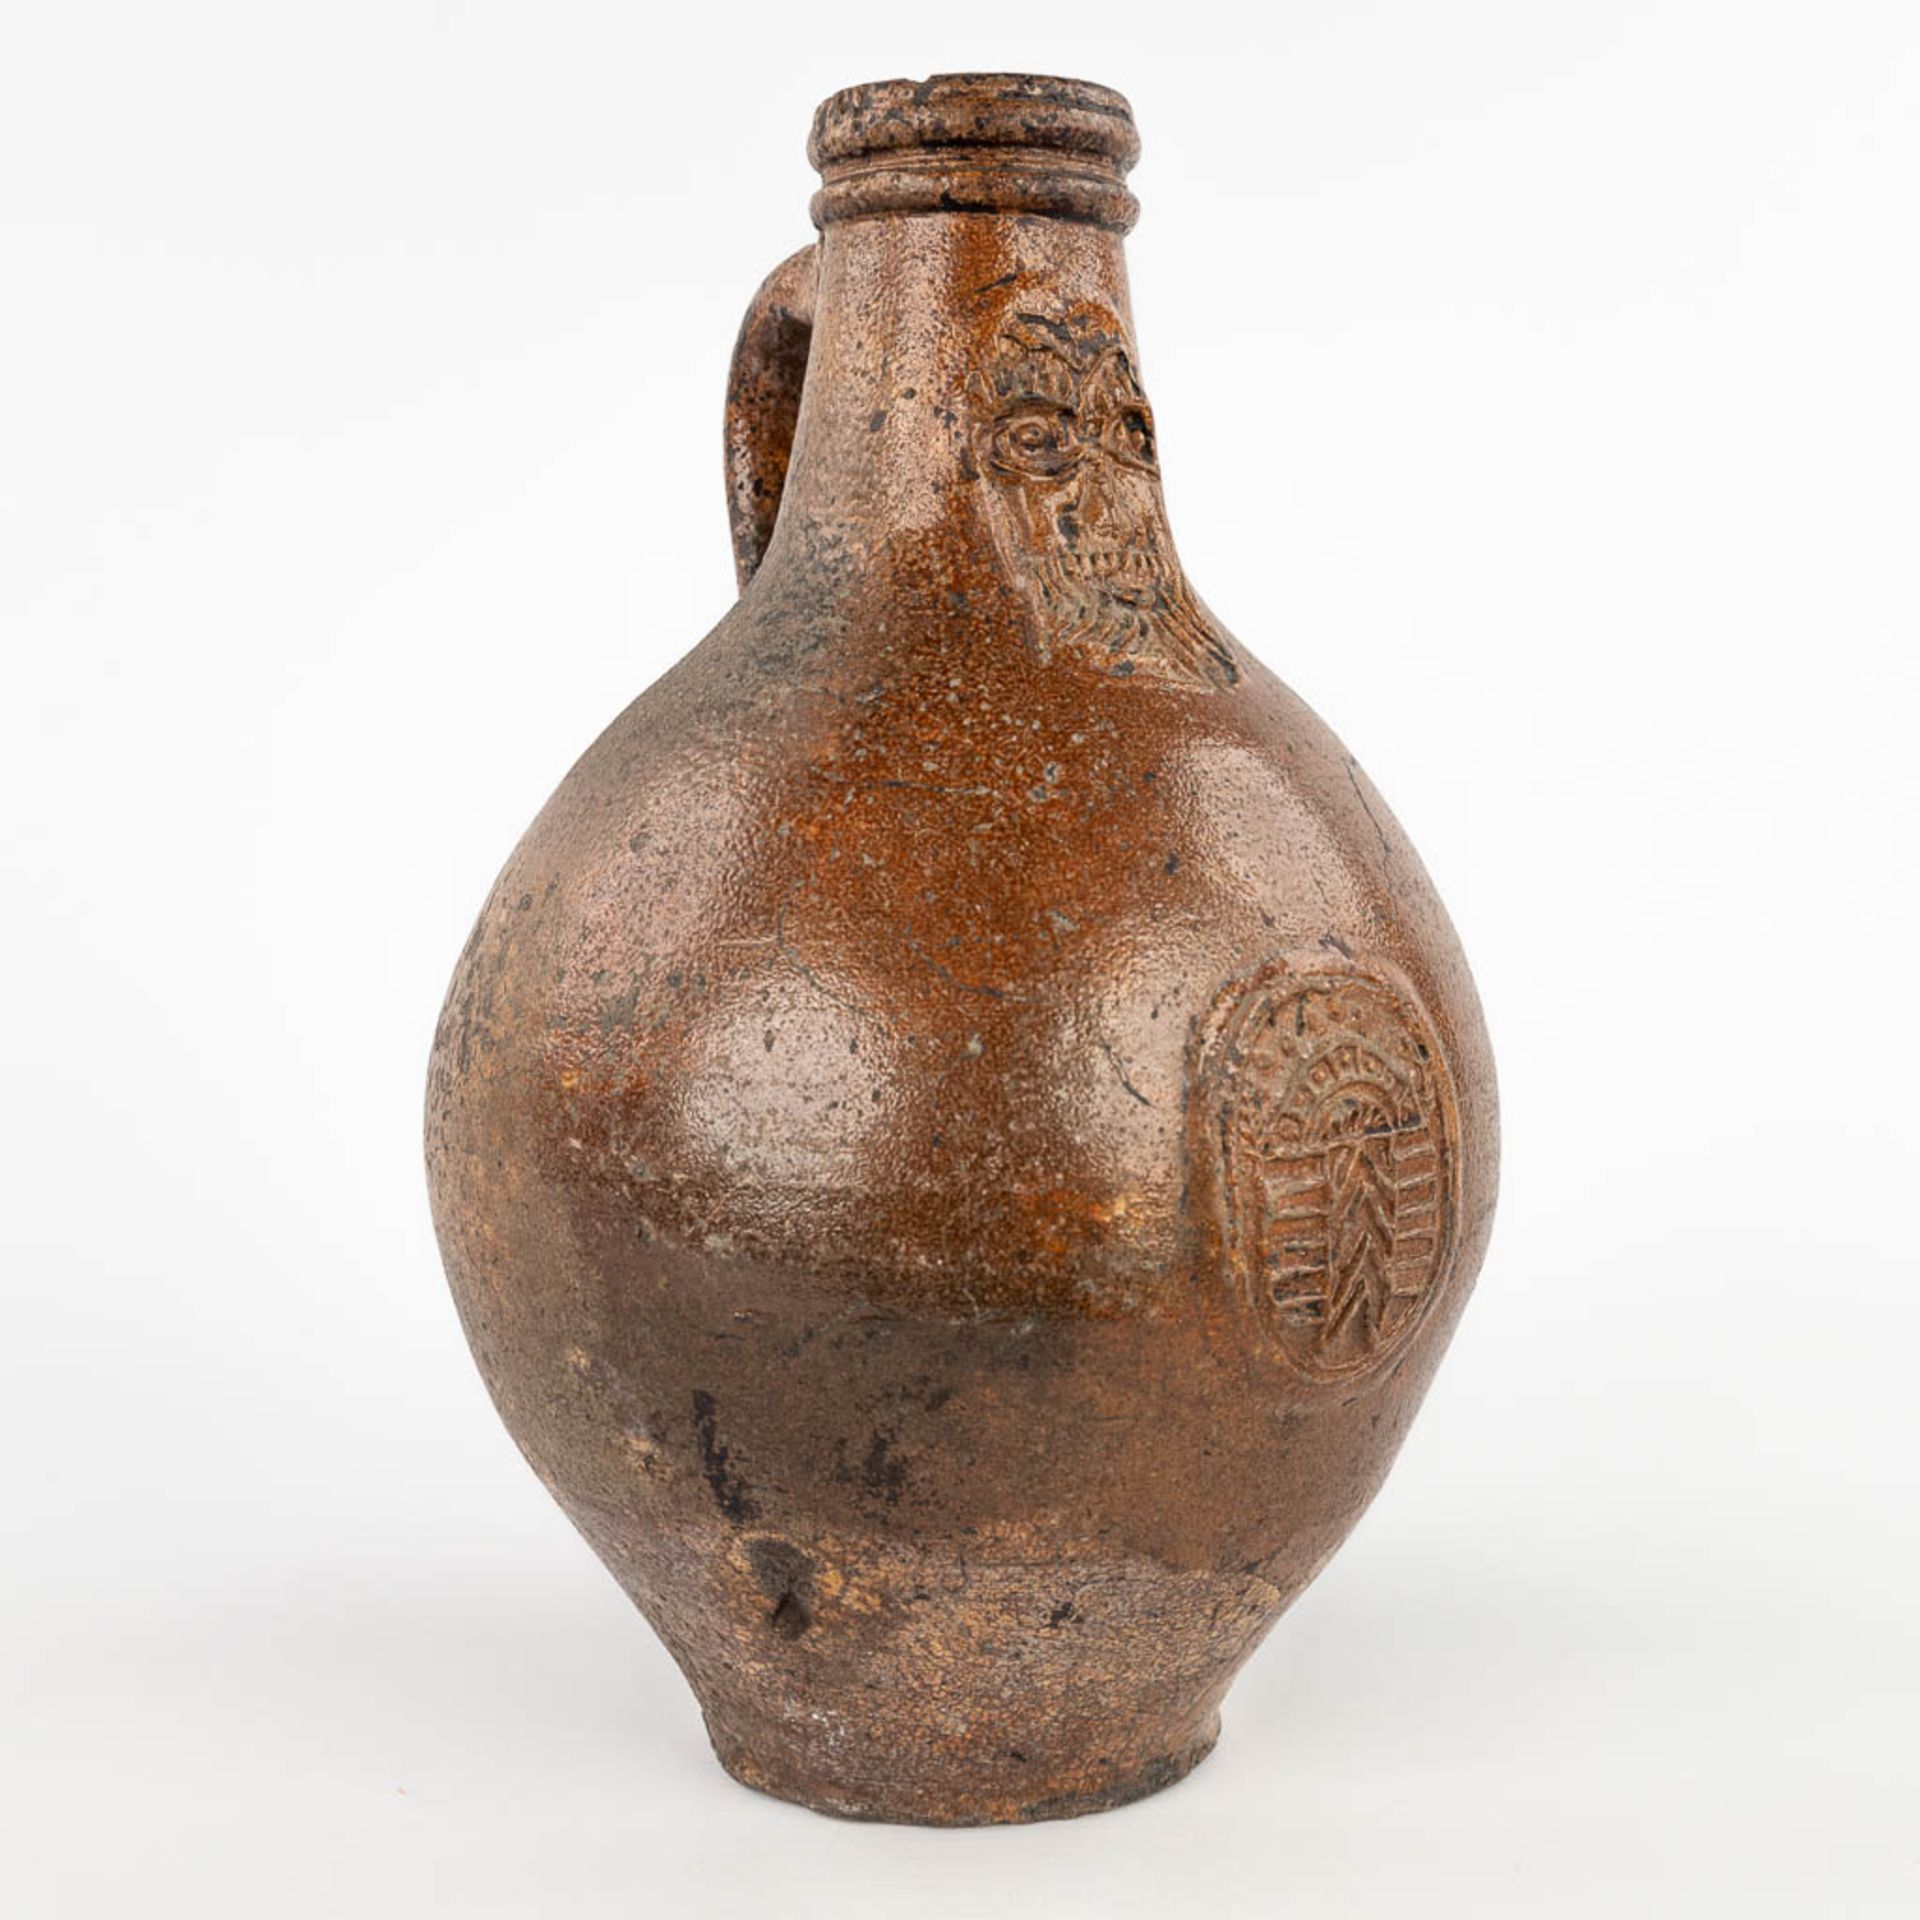 An antique Bartman jug with a single cartouche. 17th C. (H:28 x D:18 cm)